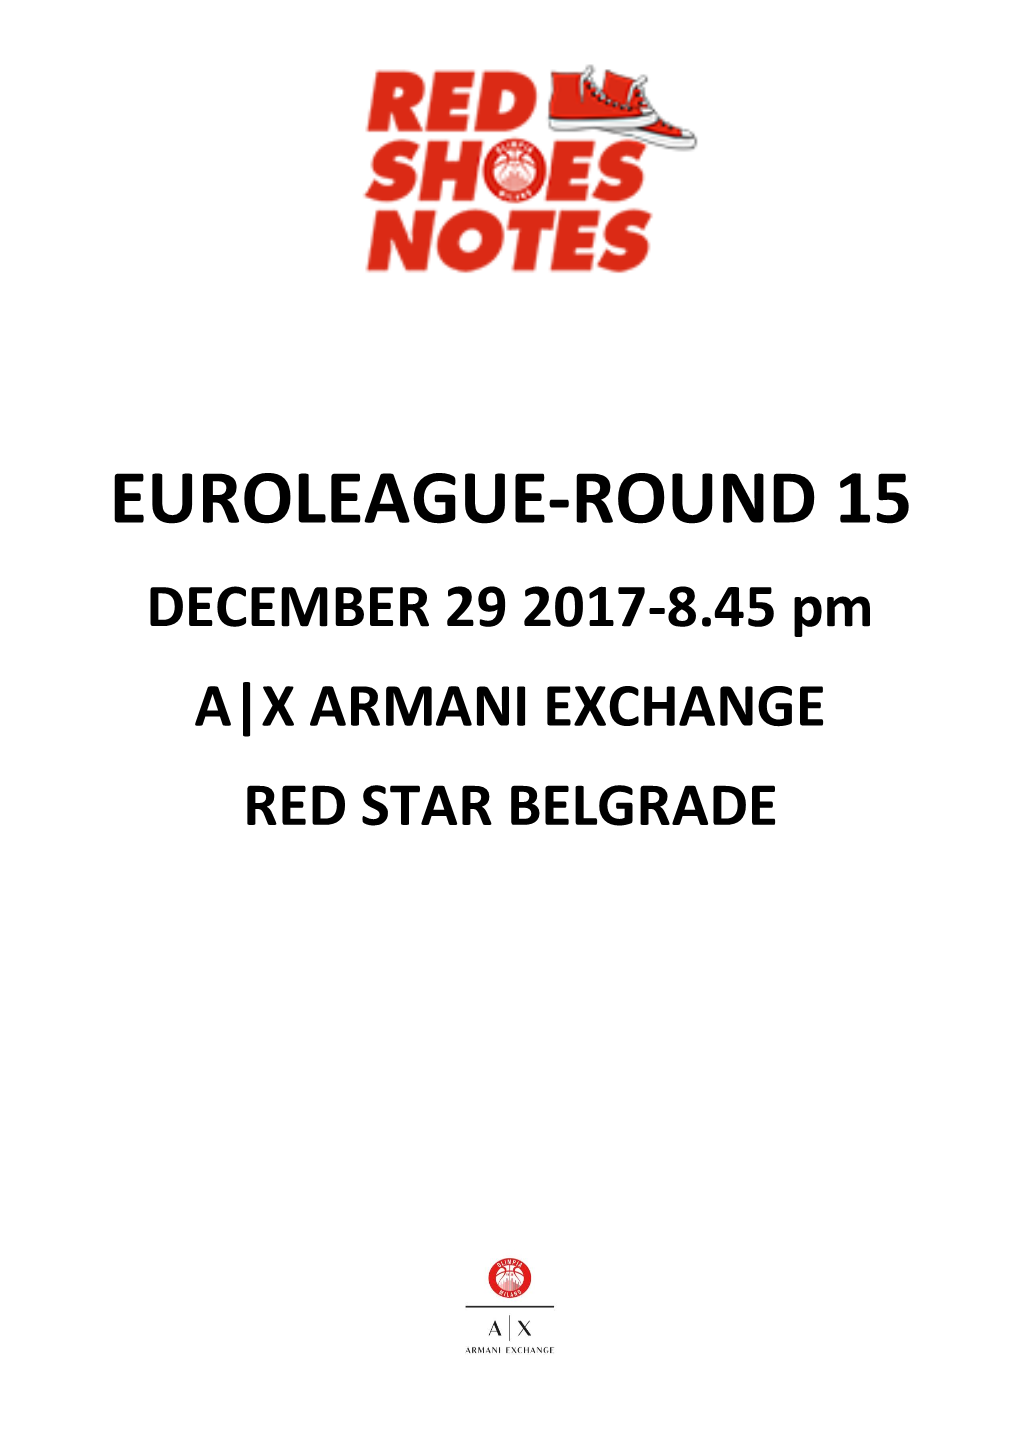 EUROLEAGUE-ROUND 15 DECEMBER 29 2017-8.45 Pm A|X ARMANI EXCHANGE RED STAR BELGRADE